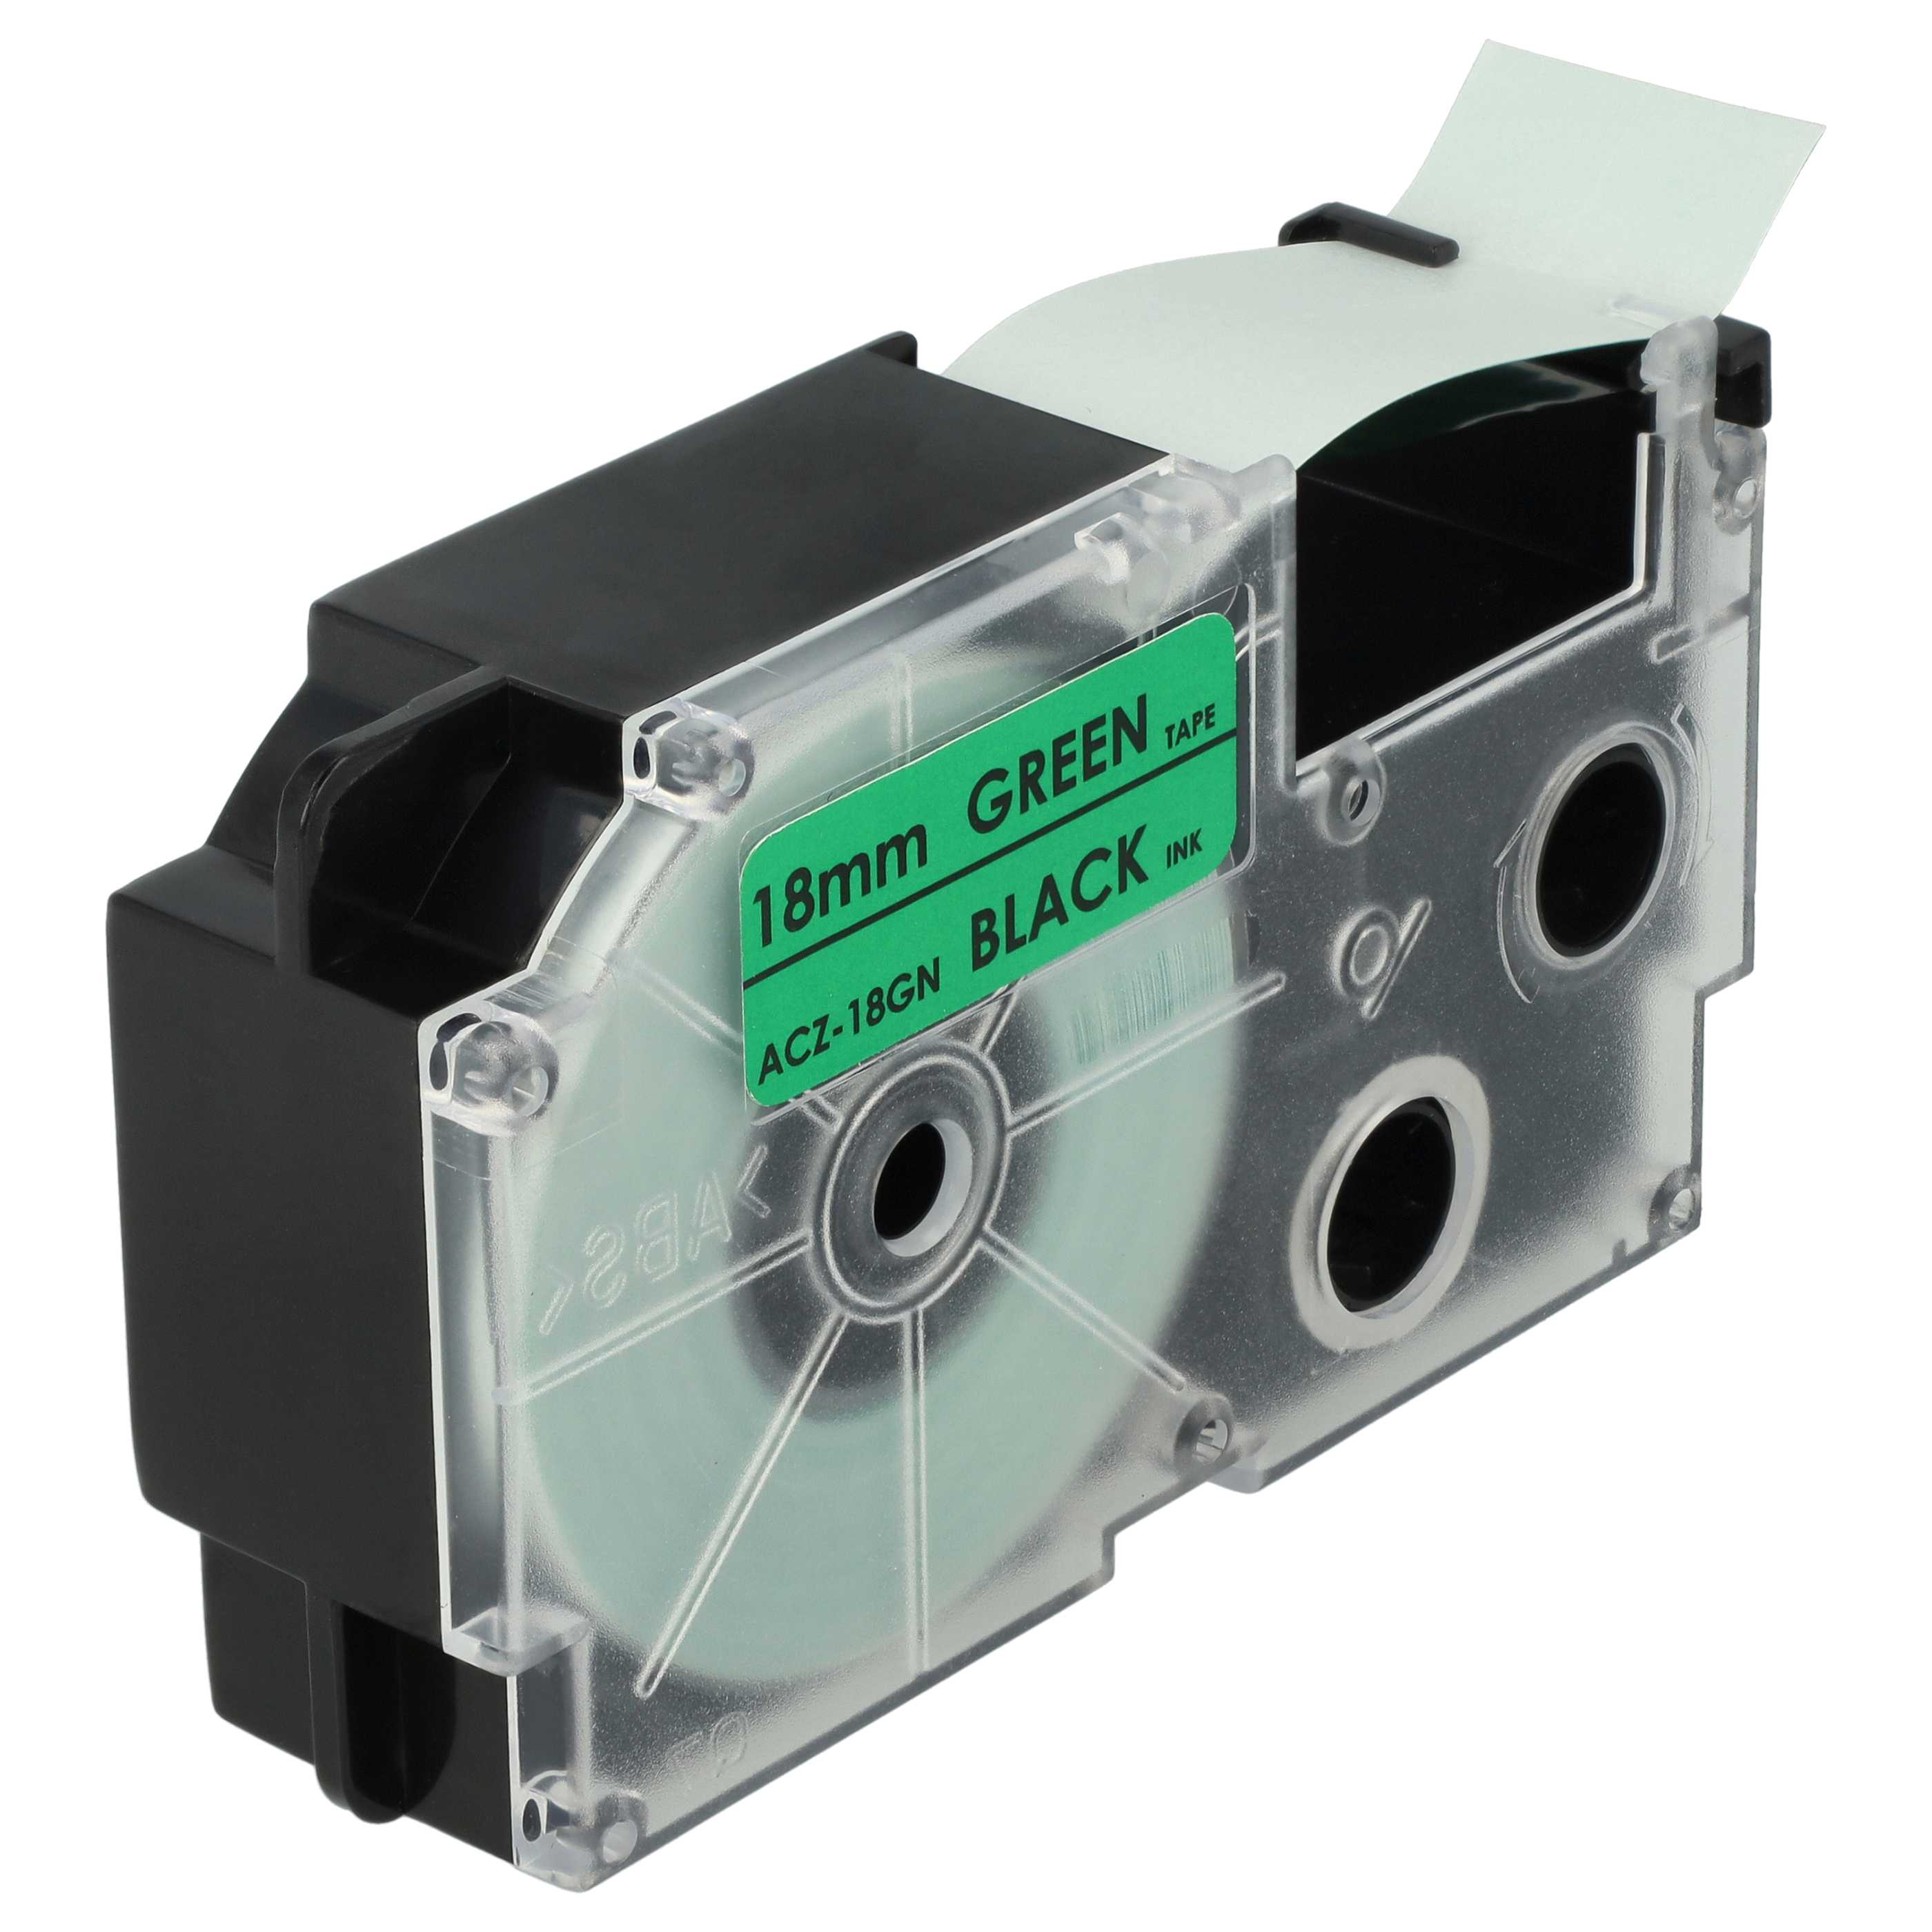 Cassette à ruban remplace Casio XR-18GN1, XR-18GN - 18mm lettrage Noir ruban Vert, pet+ RESIN